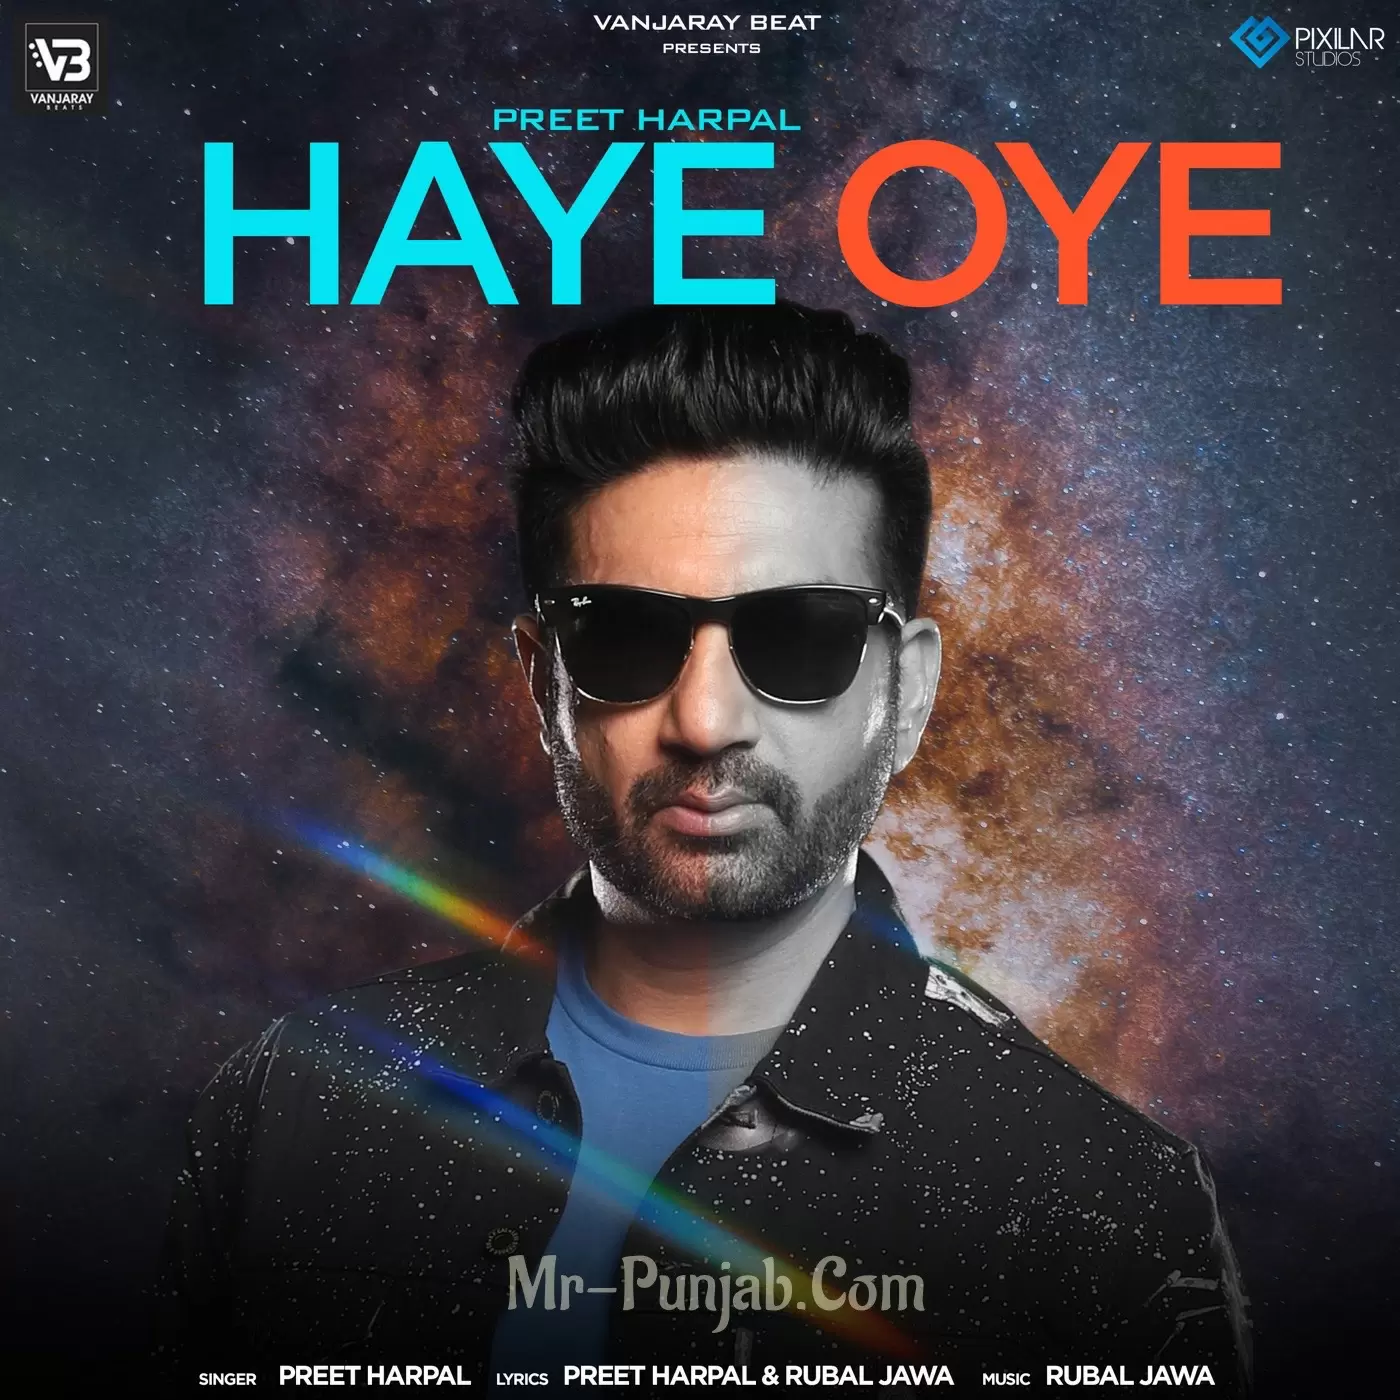 Haye Oye Preet Harpal Mp3 Download Song - Mr-Punjab